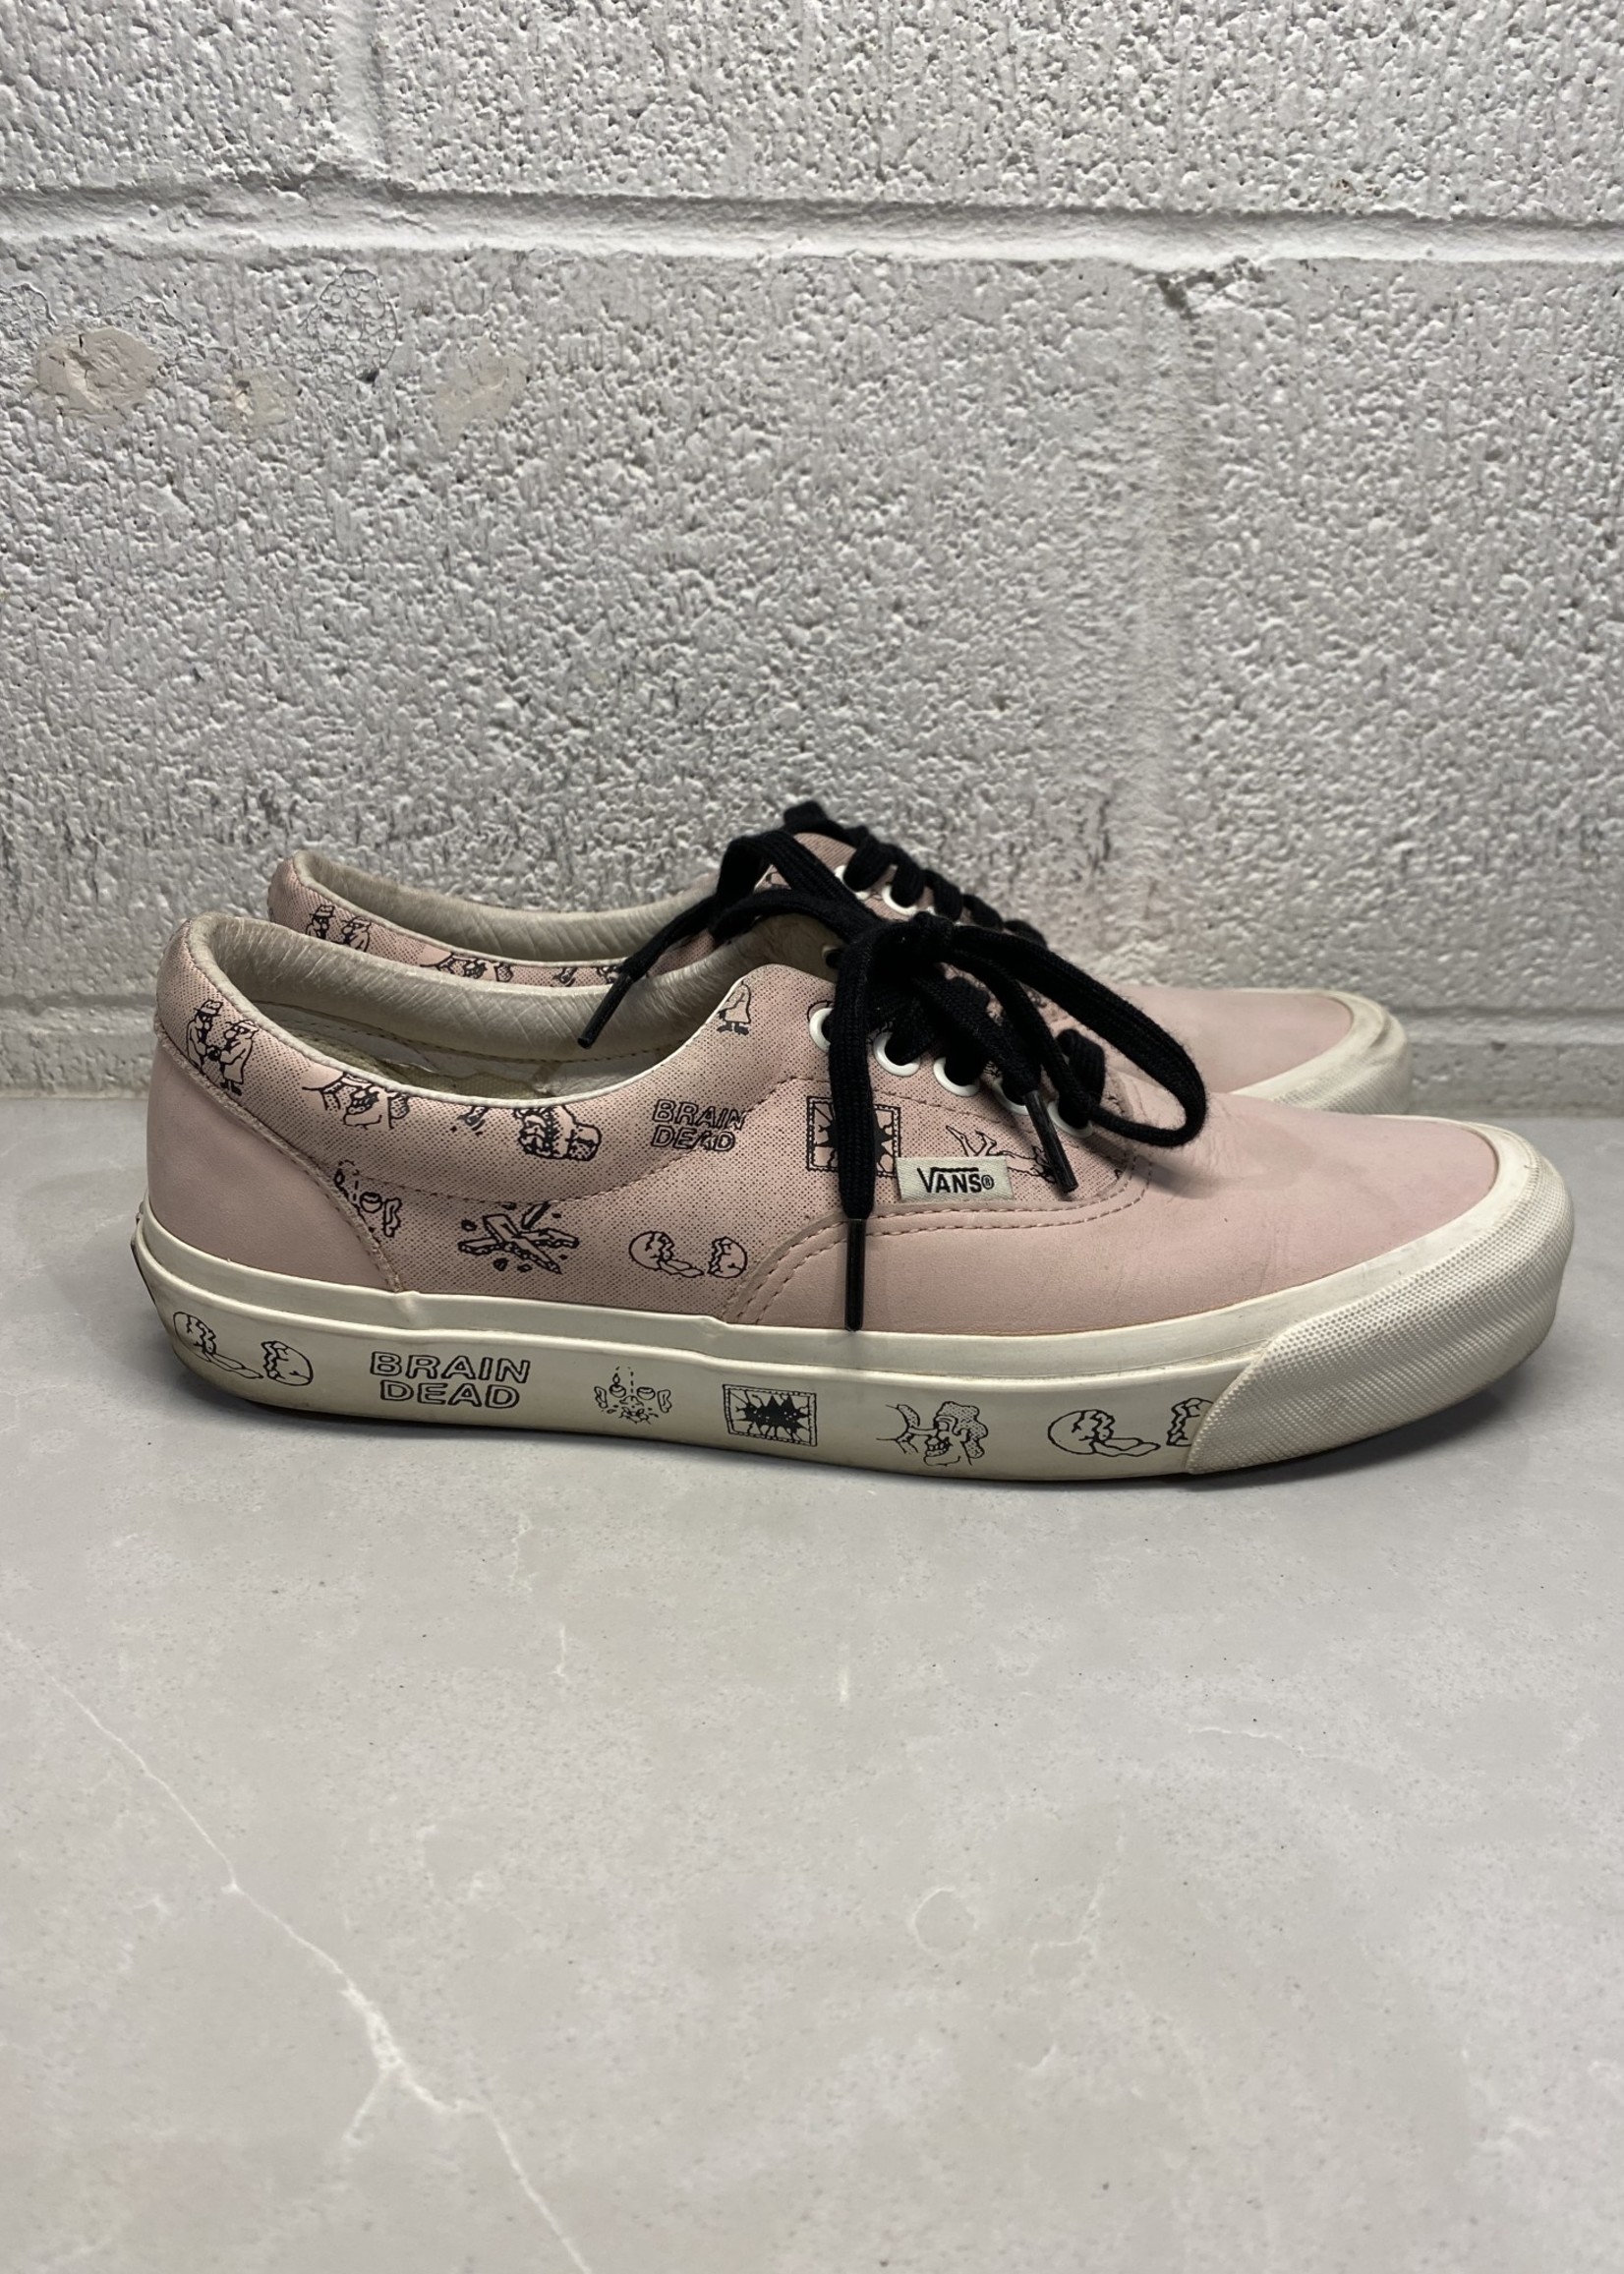 Vans x Brain Dead Pink Sneakers 9